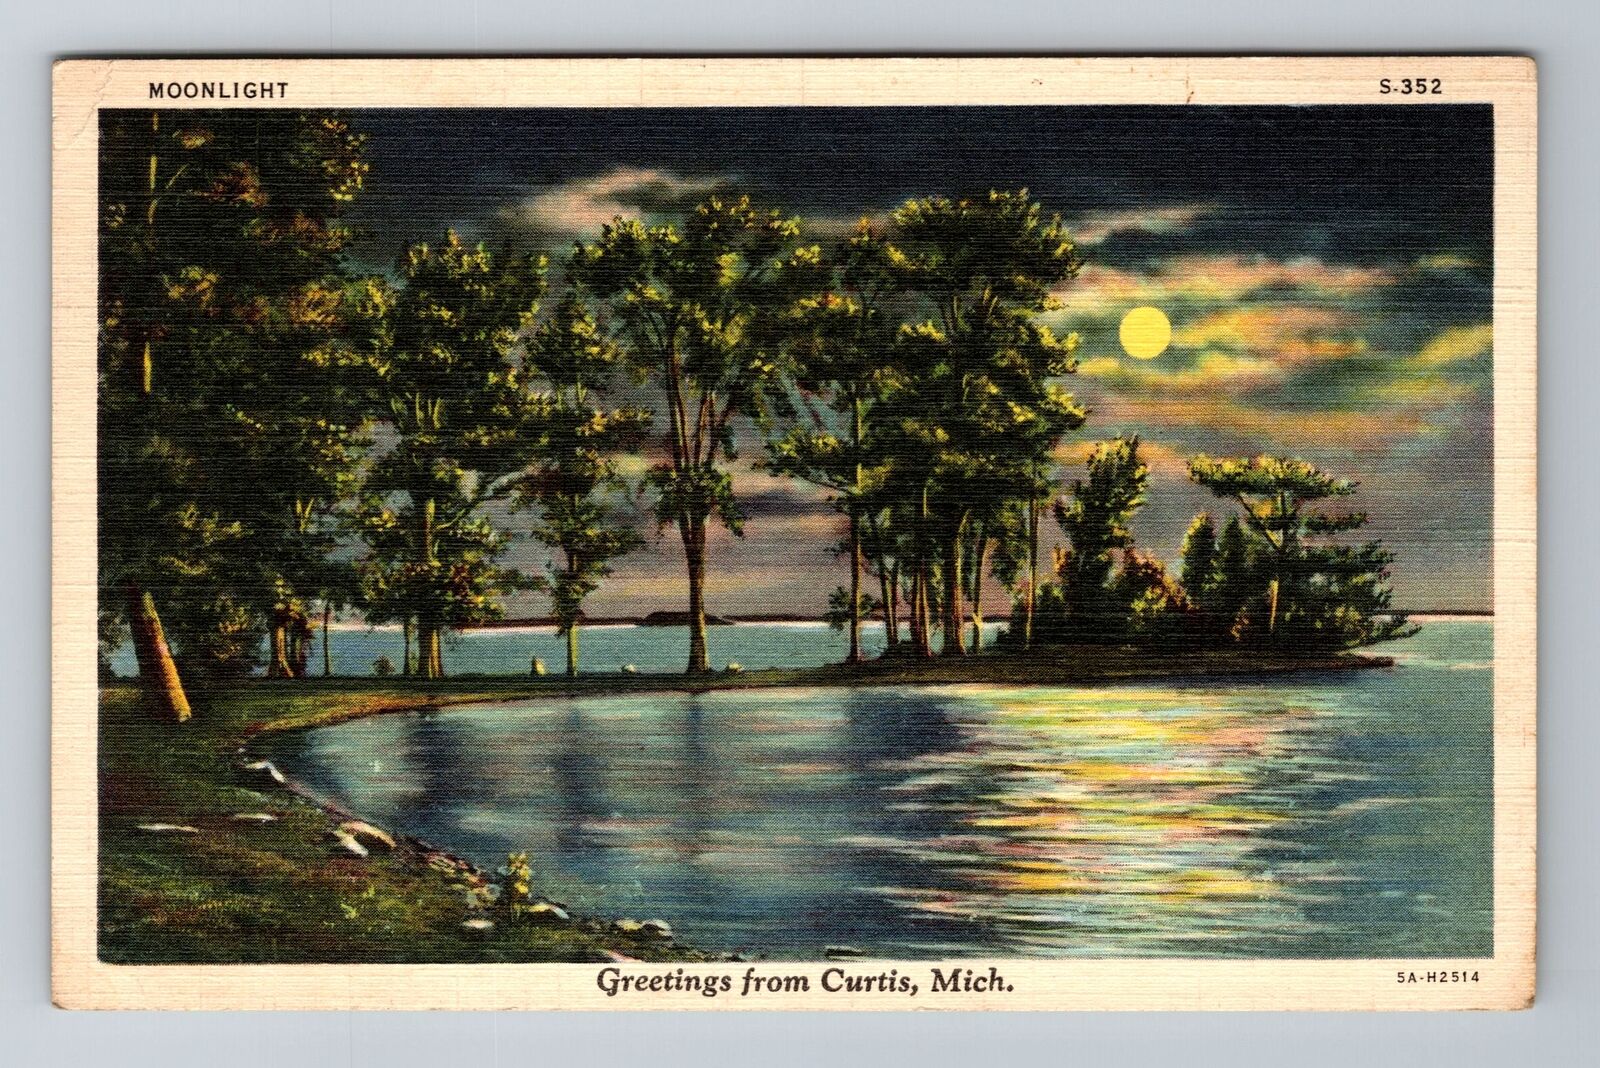 Curtis MI-Michigan, Scenic Greetings, Moonlight, Vintage c1939 Postcard